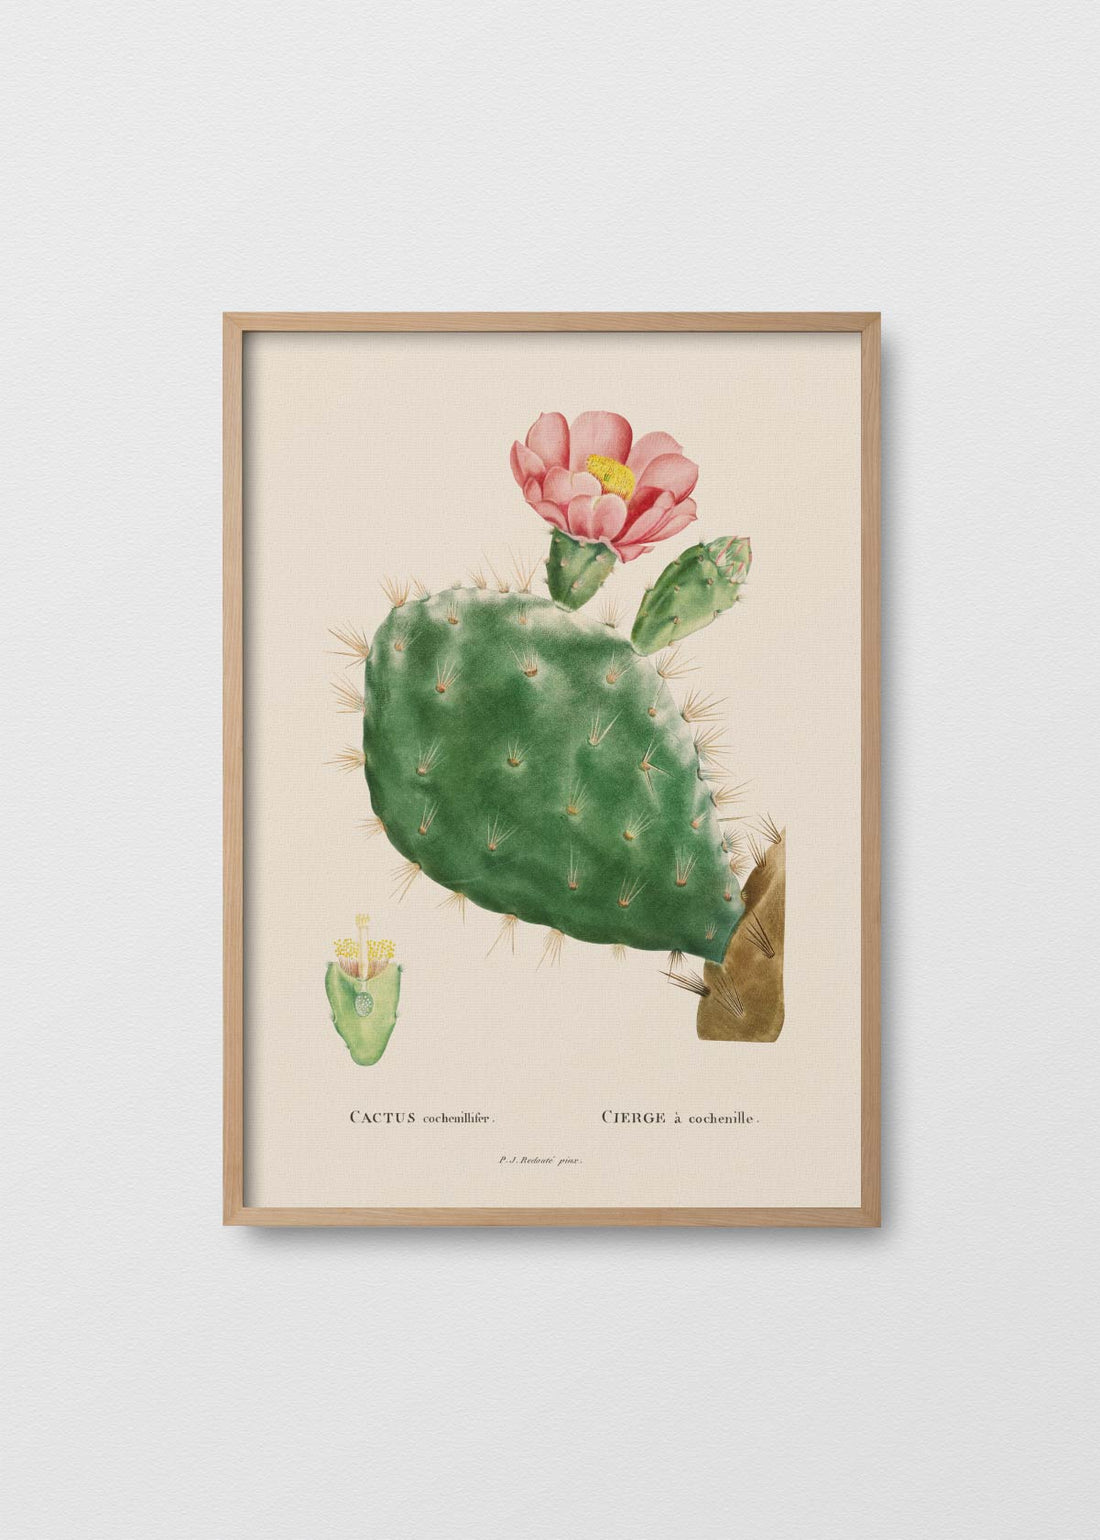 Cactus Cochenillifer - Testimoniaprints